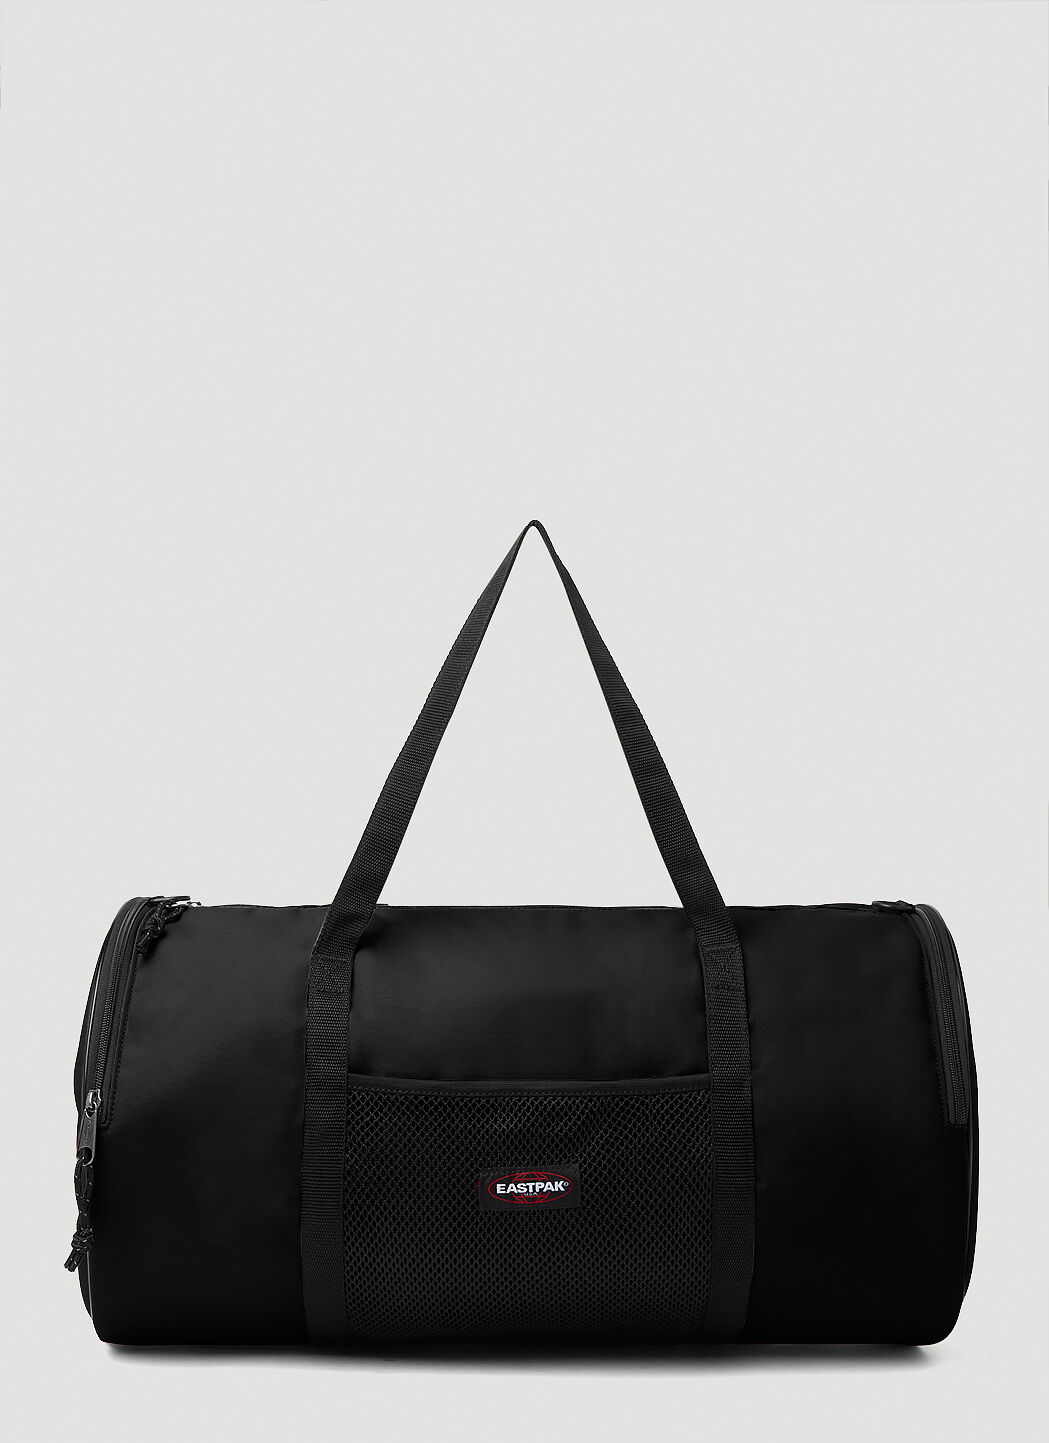 Eastpak x Telfar Large Duffle Weekend Bag Red est0353020